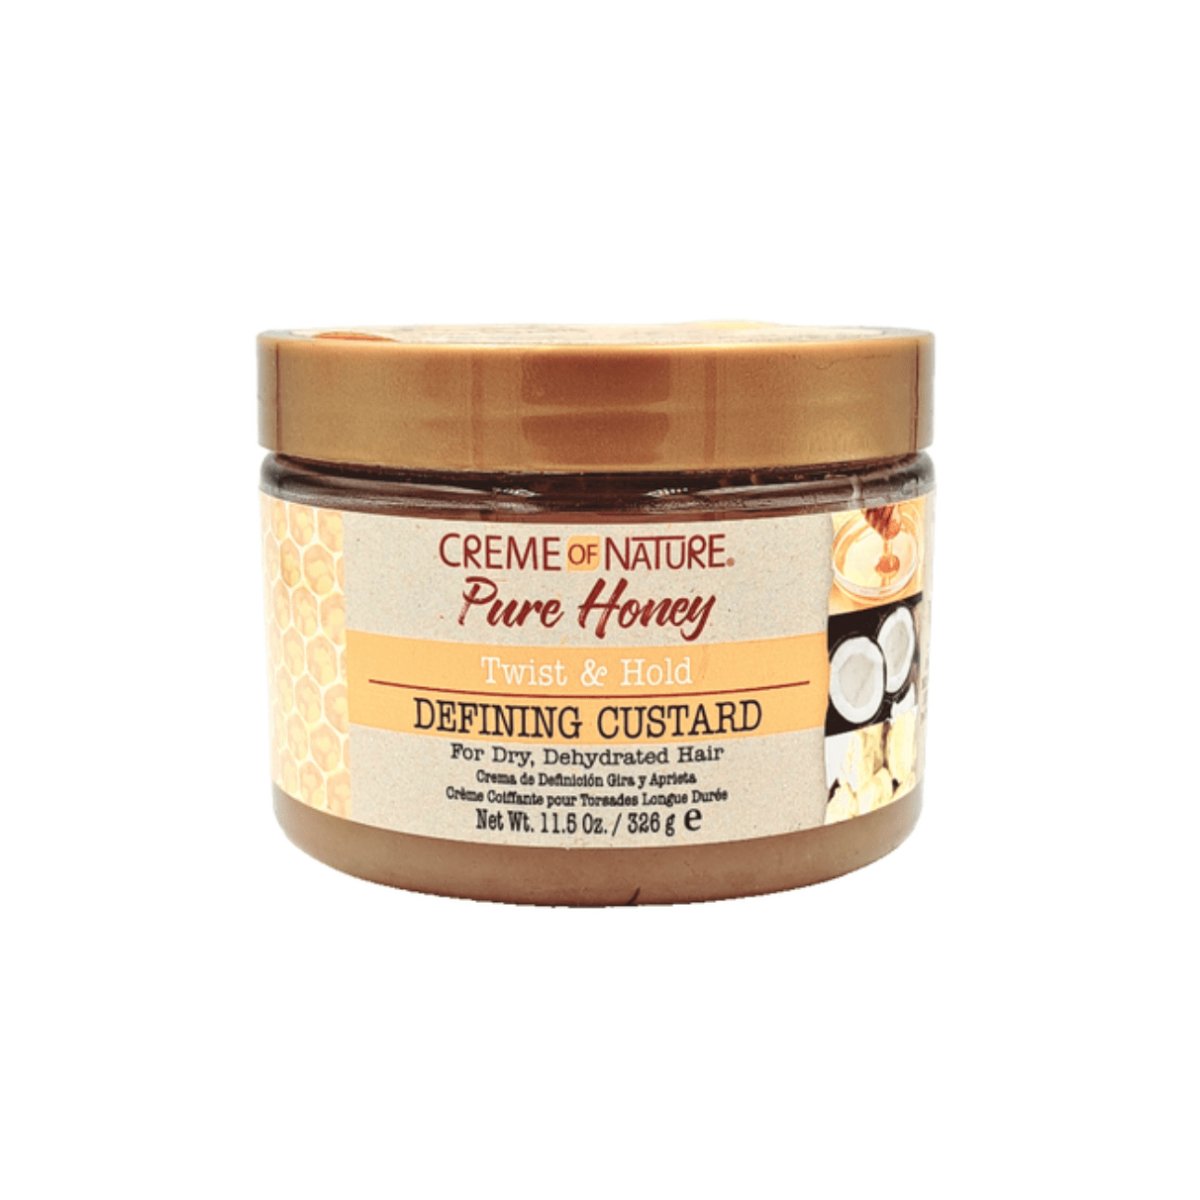 Creme of Nature Pure Honey Twist & Hold Defining Custard 326g - CosFair GmbH